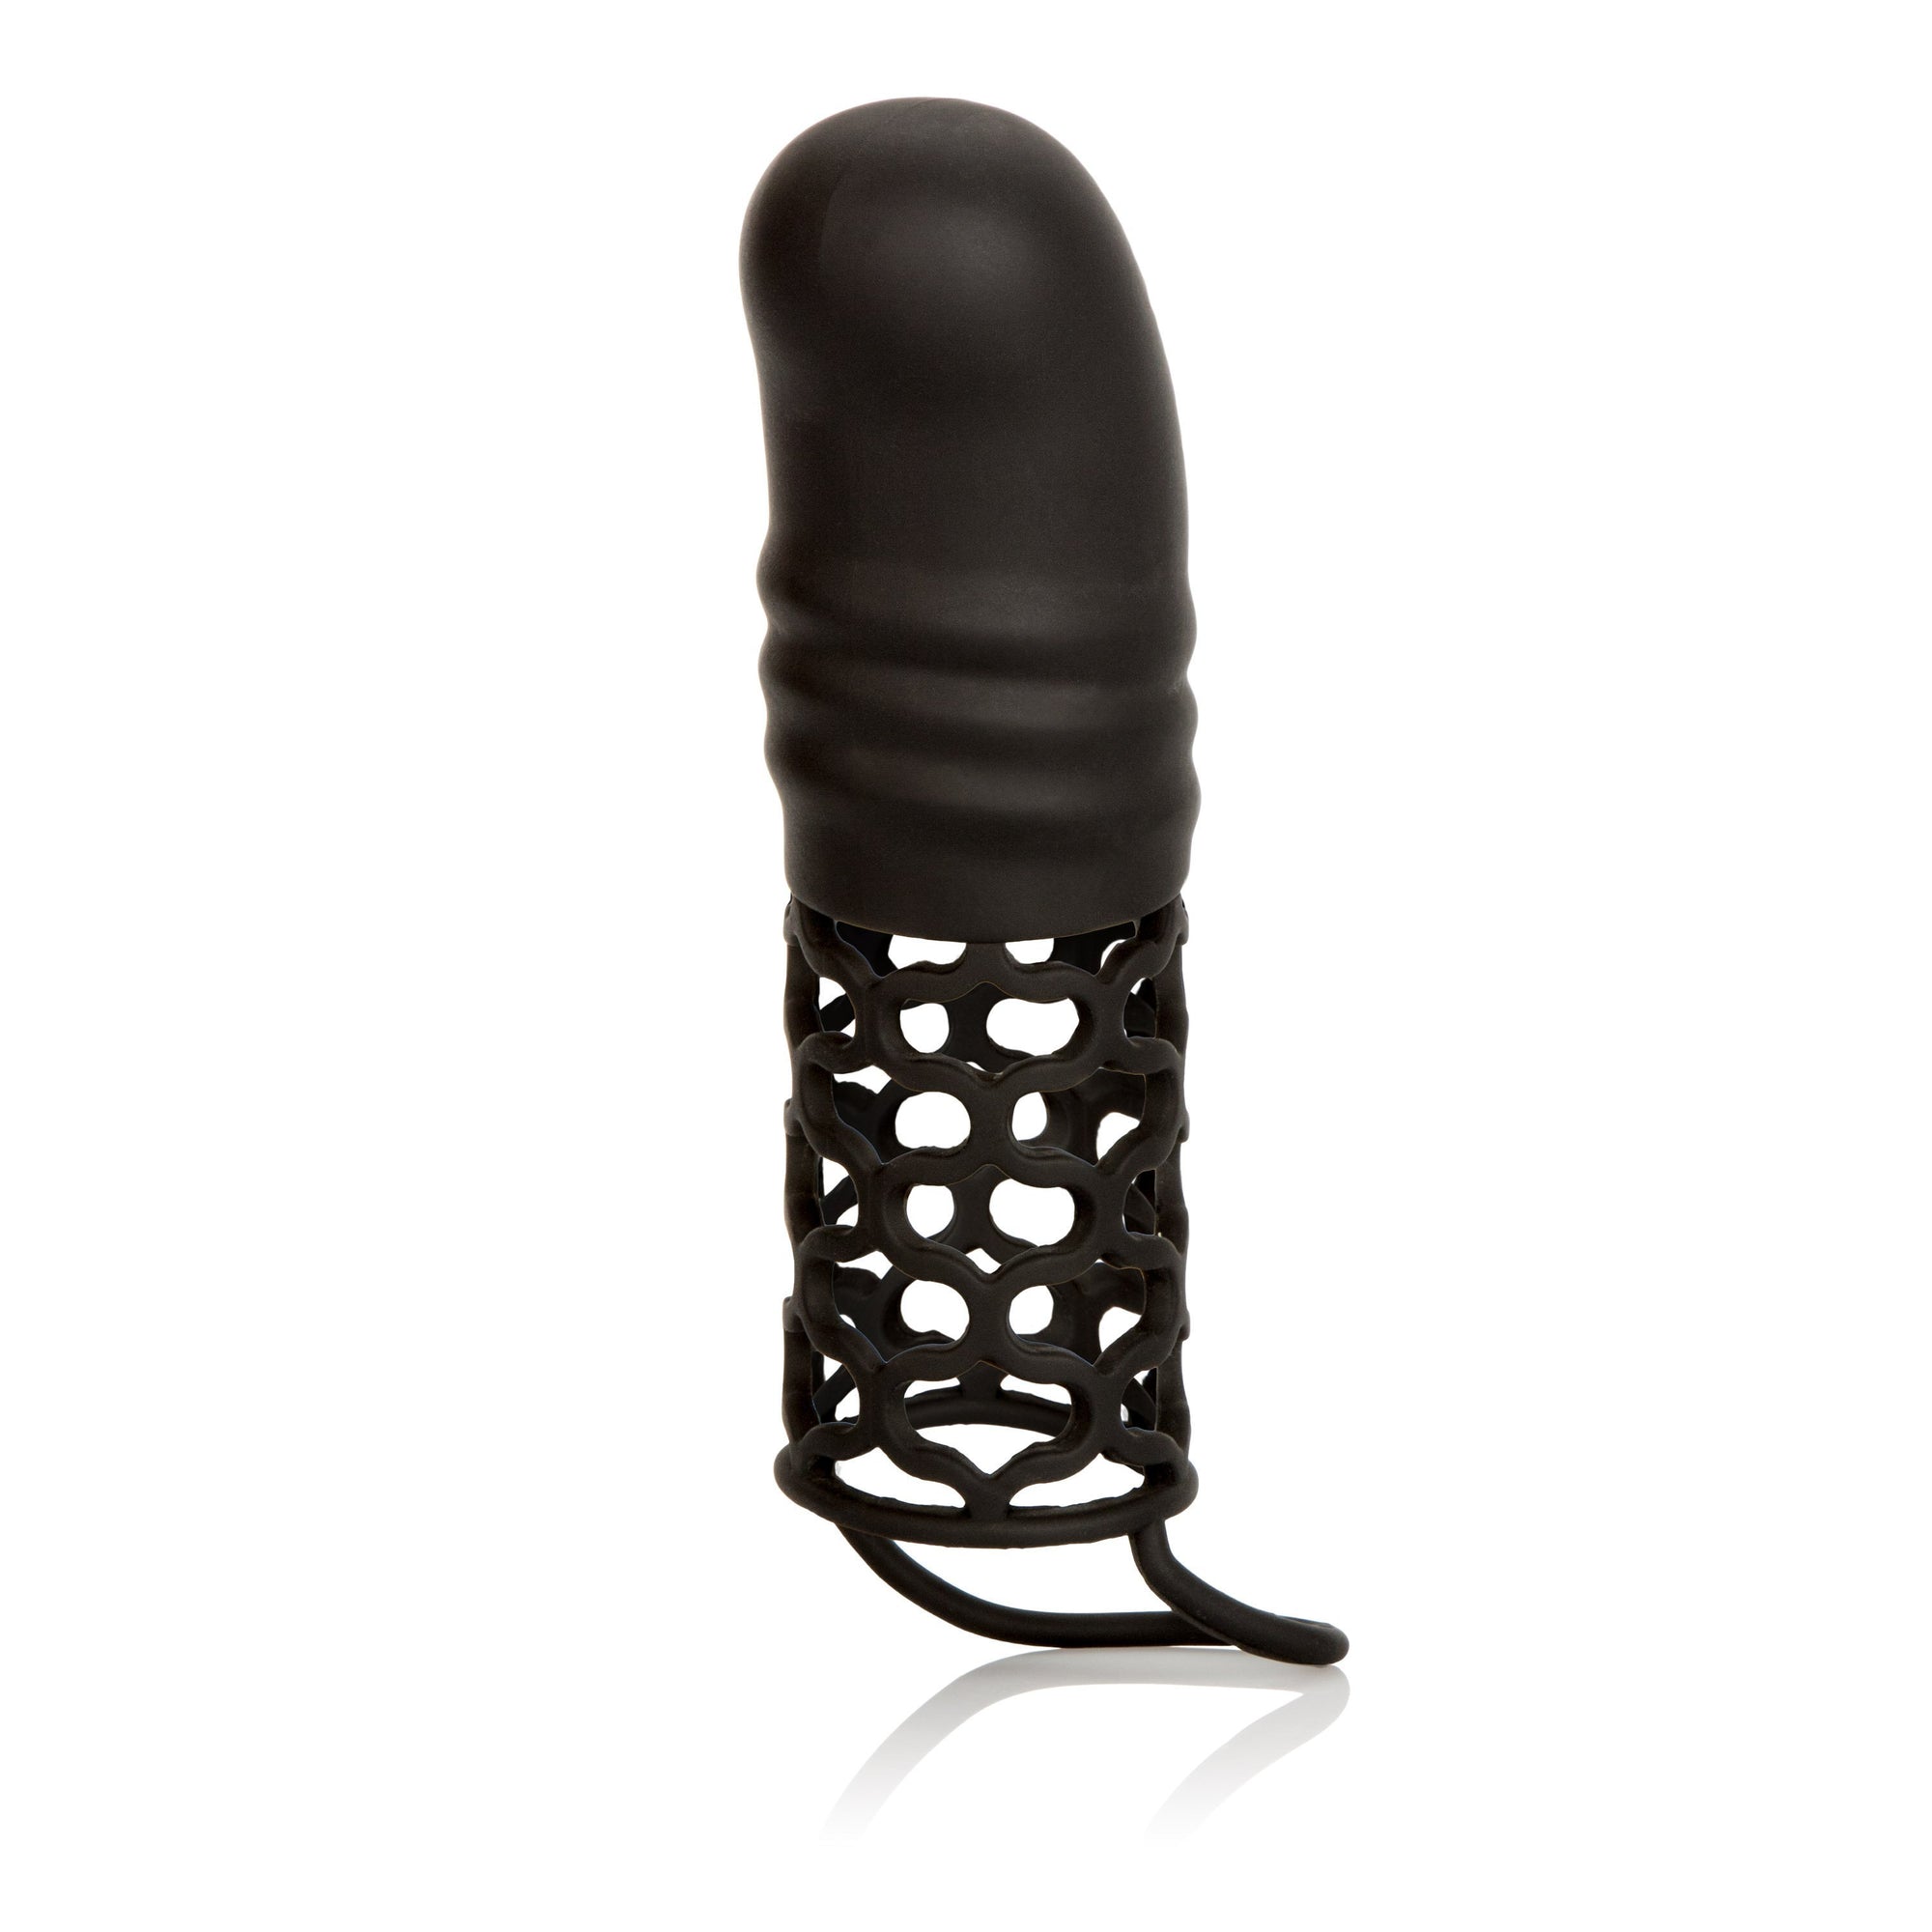 California Exotics - Silicone 2" Penis Extension (Black) Silicone Cock Cage (Non Vibration) Singapore